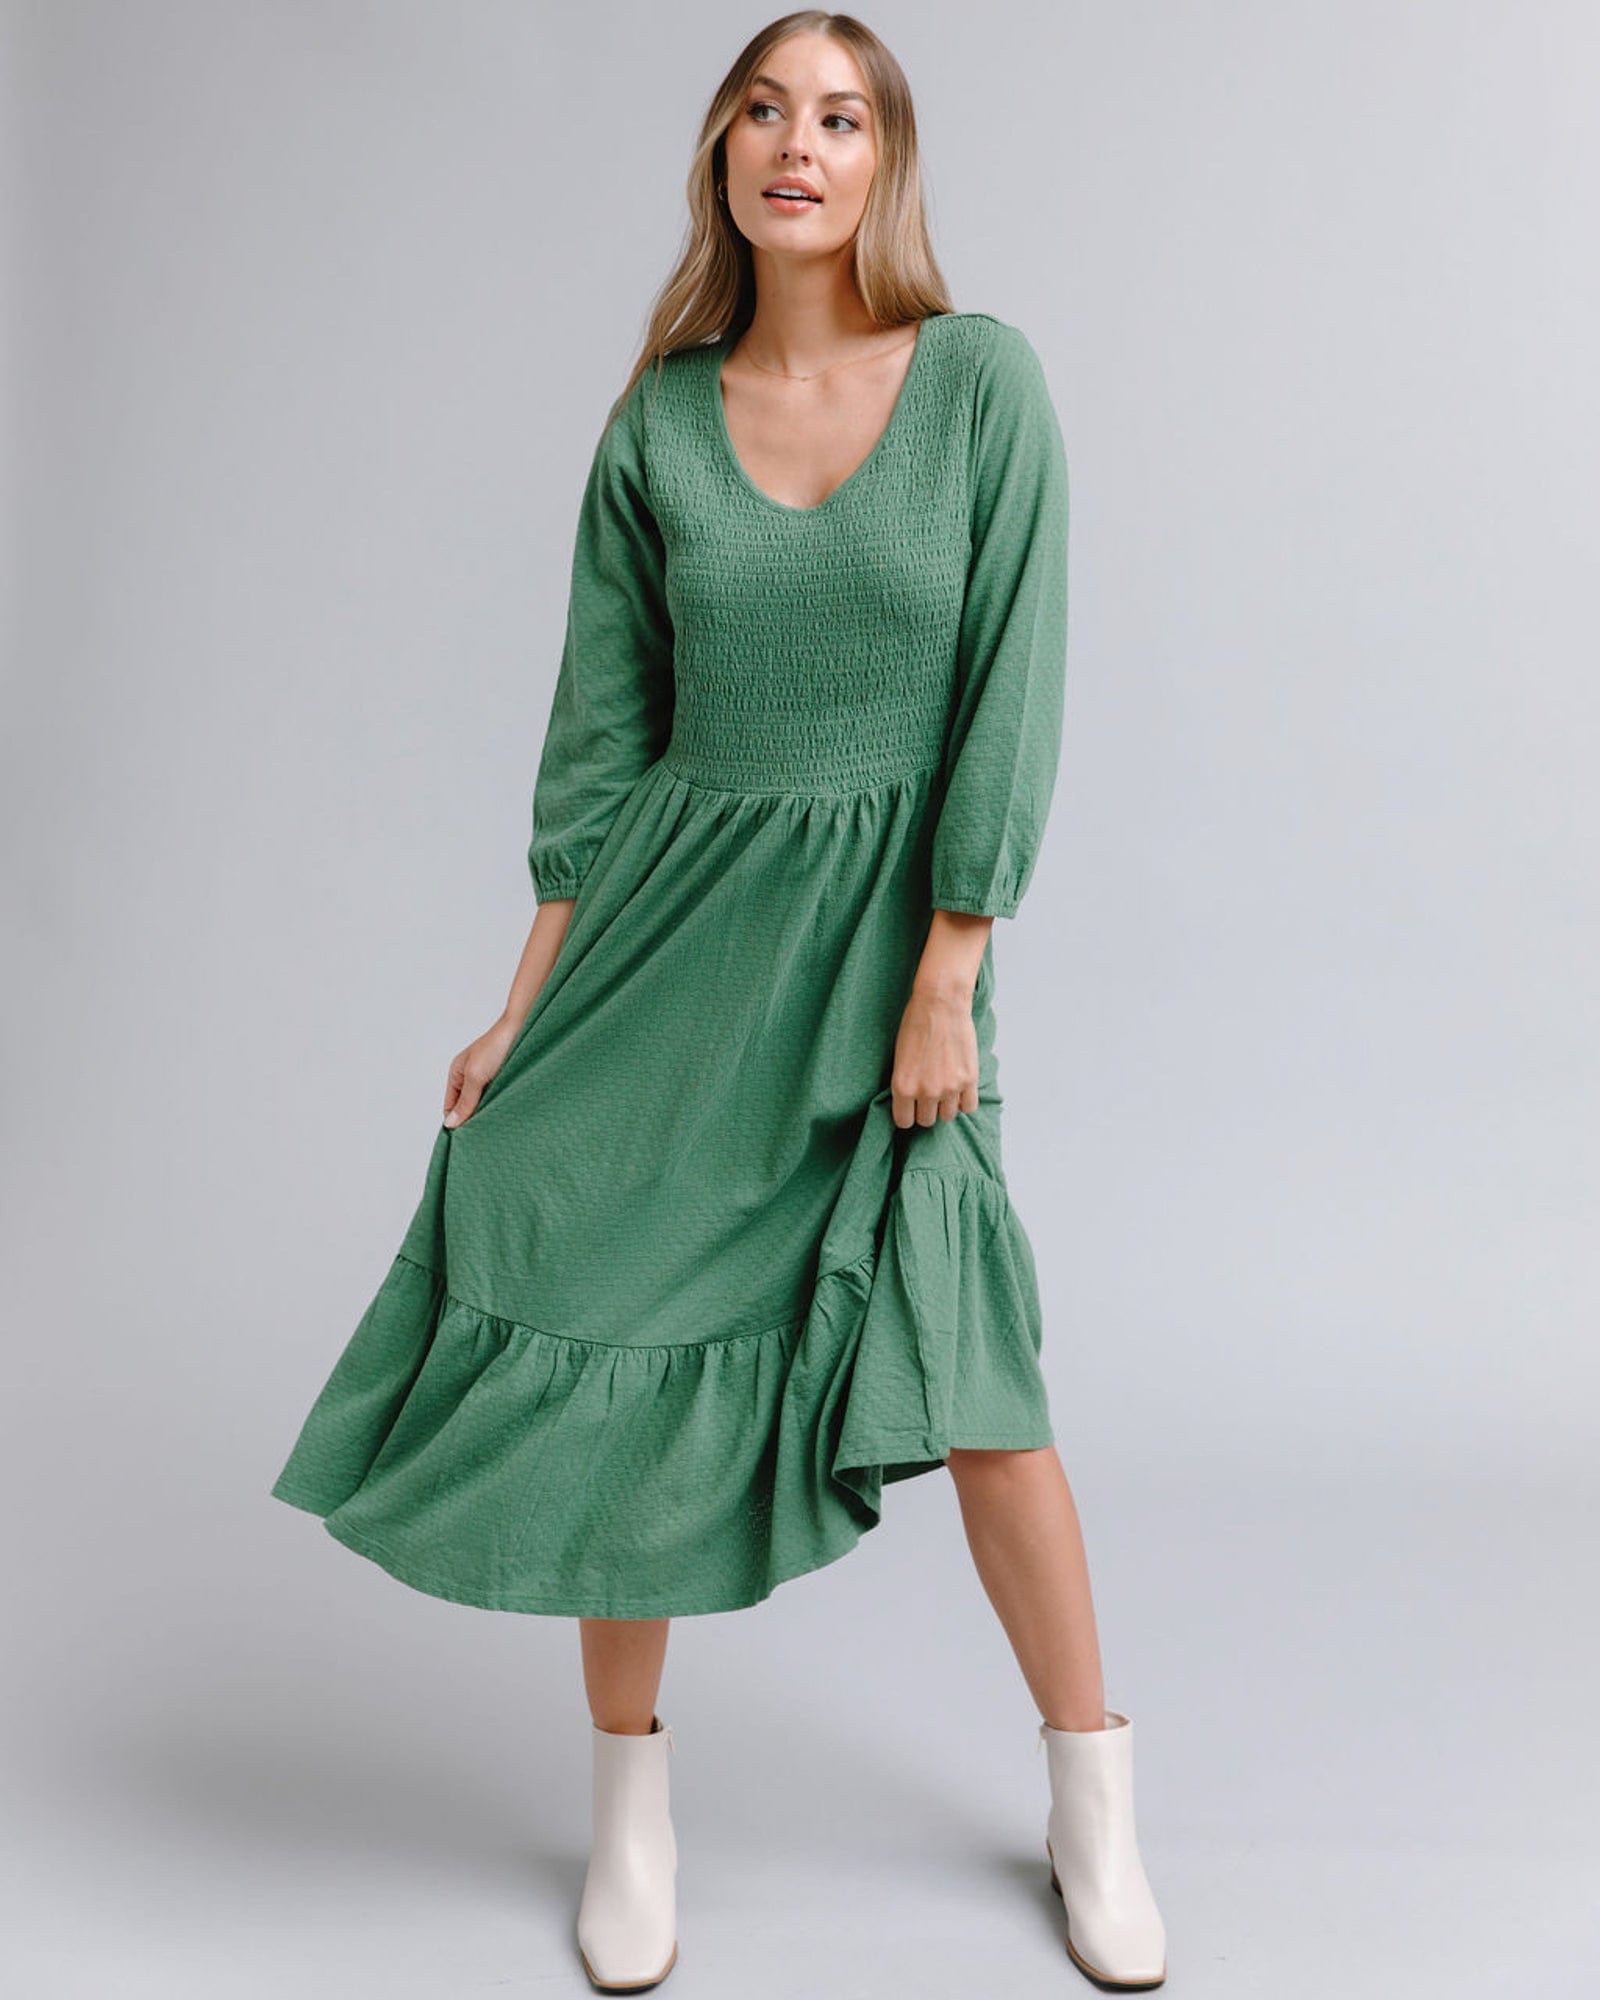 Woman in a long sleeve, midi-length, smocked bodice, green dress